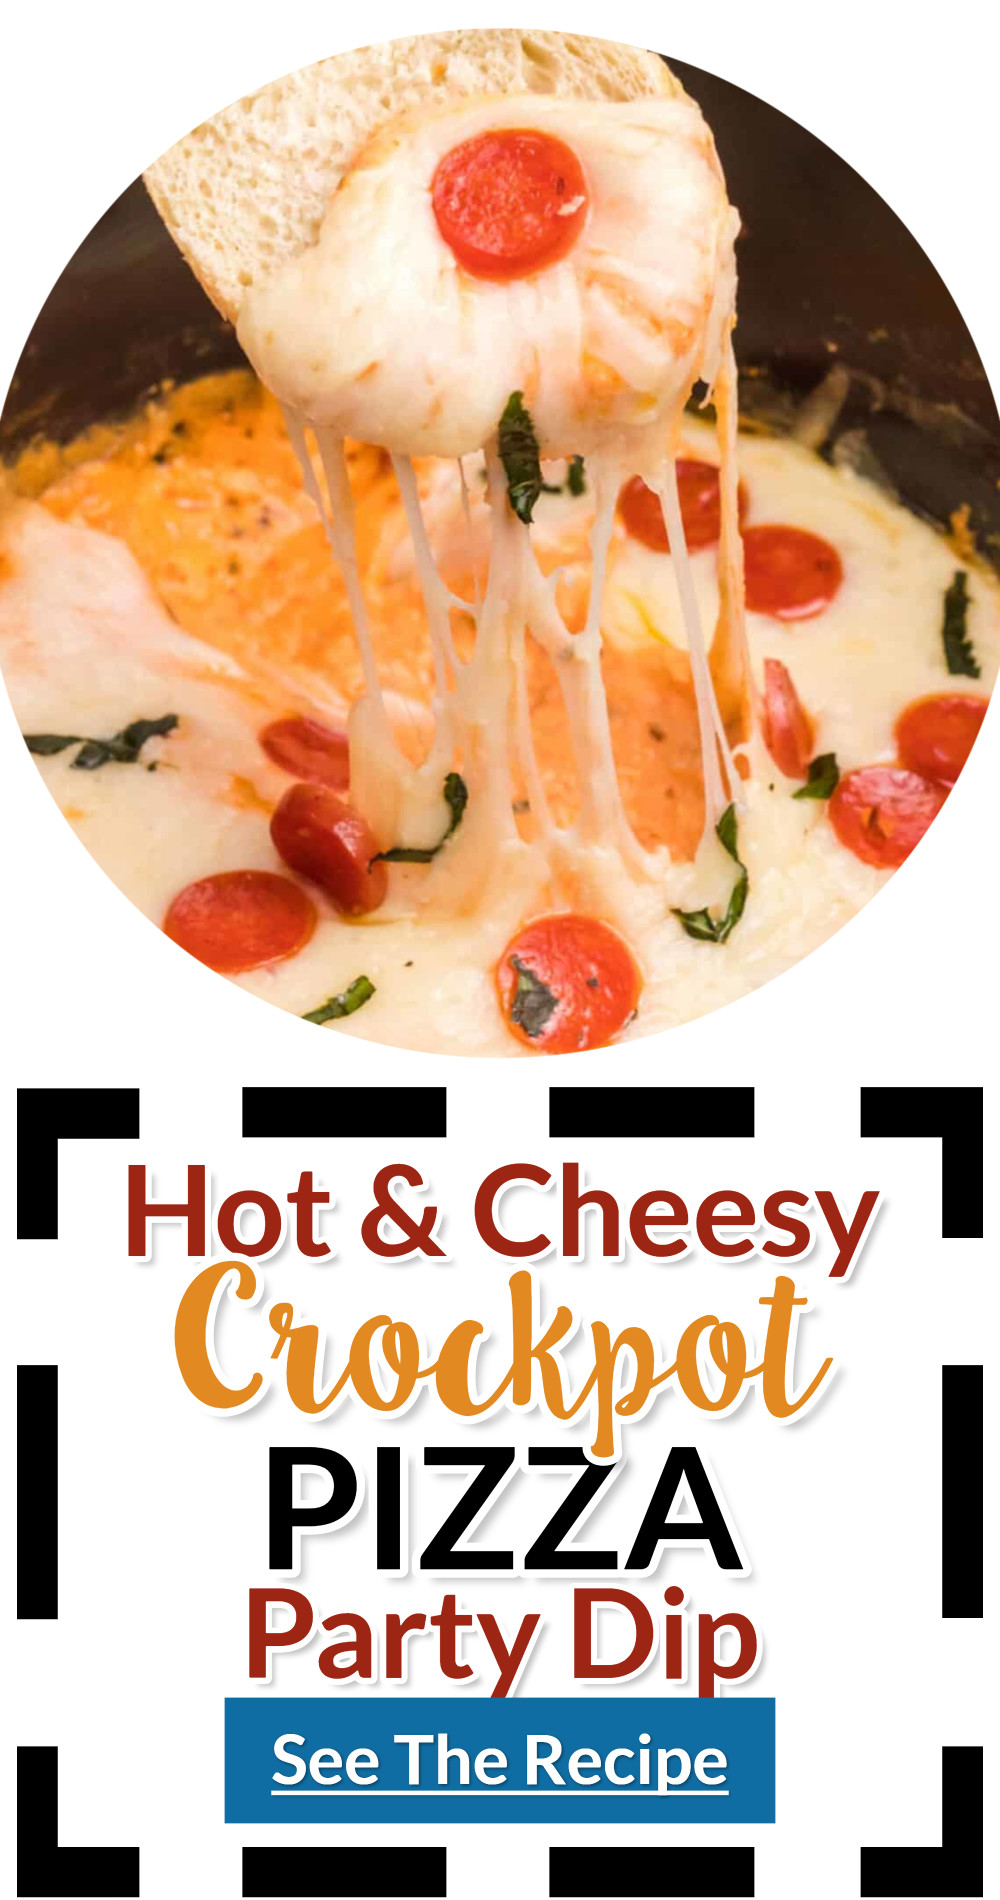 Hot and cheesy Crockpot Pizza Party Dip Recipe